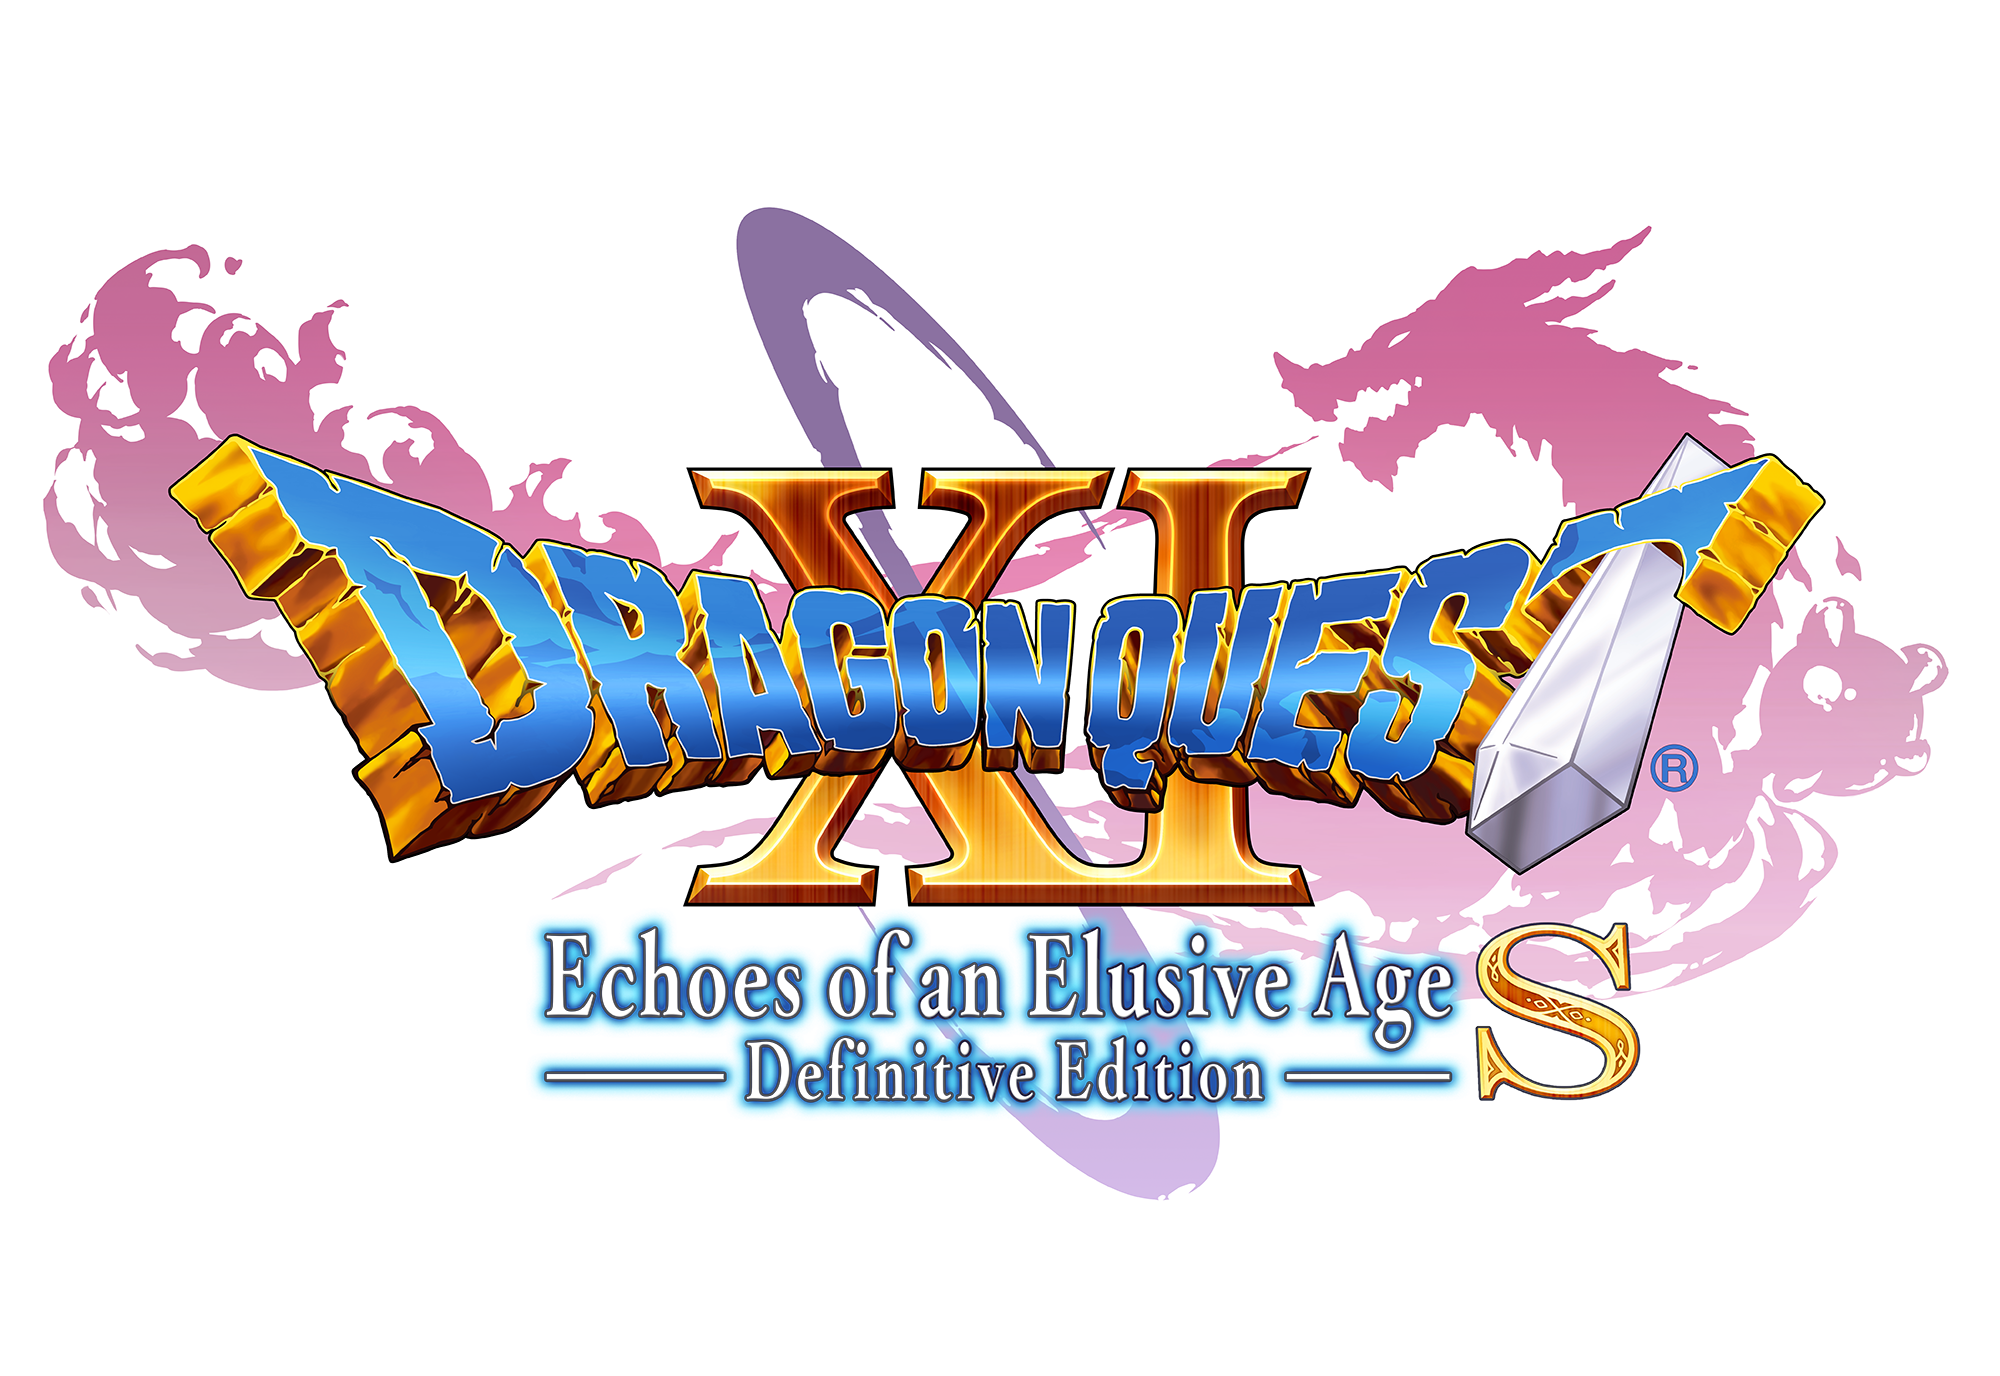 Kanaloamari · Dragon Quest XI Wiki